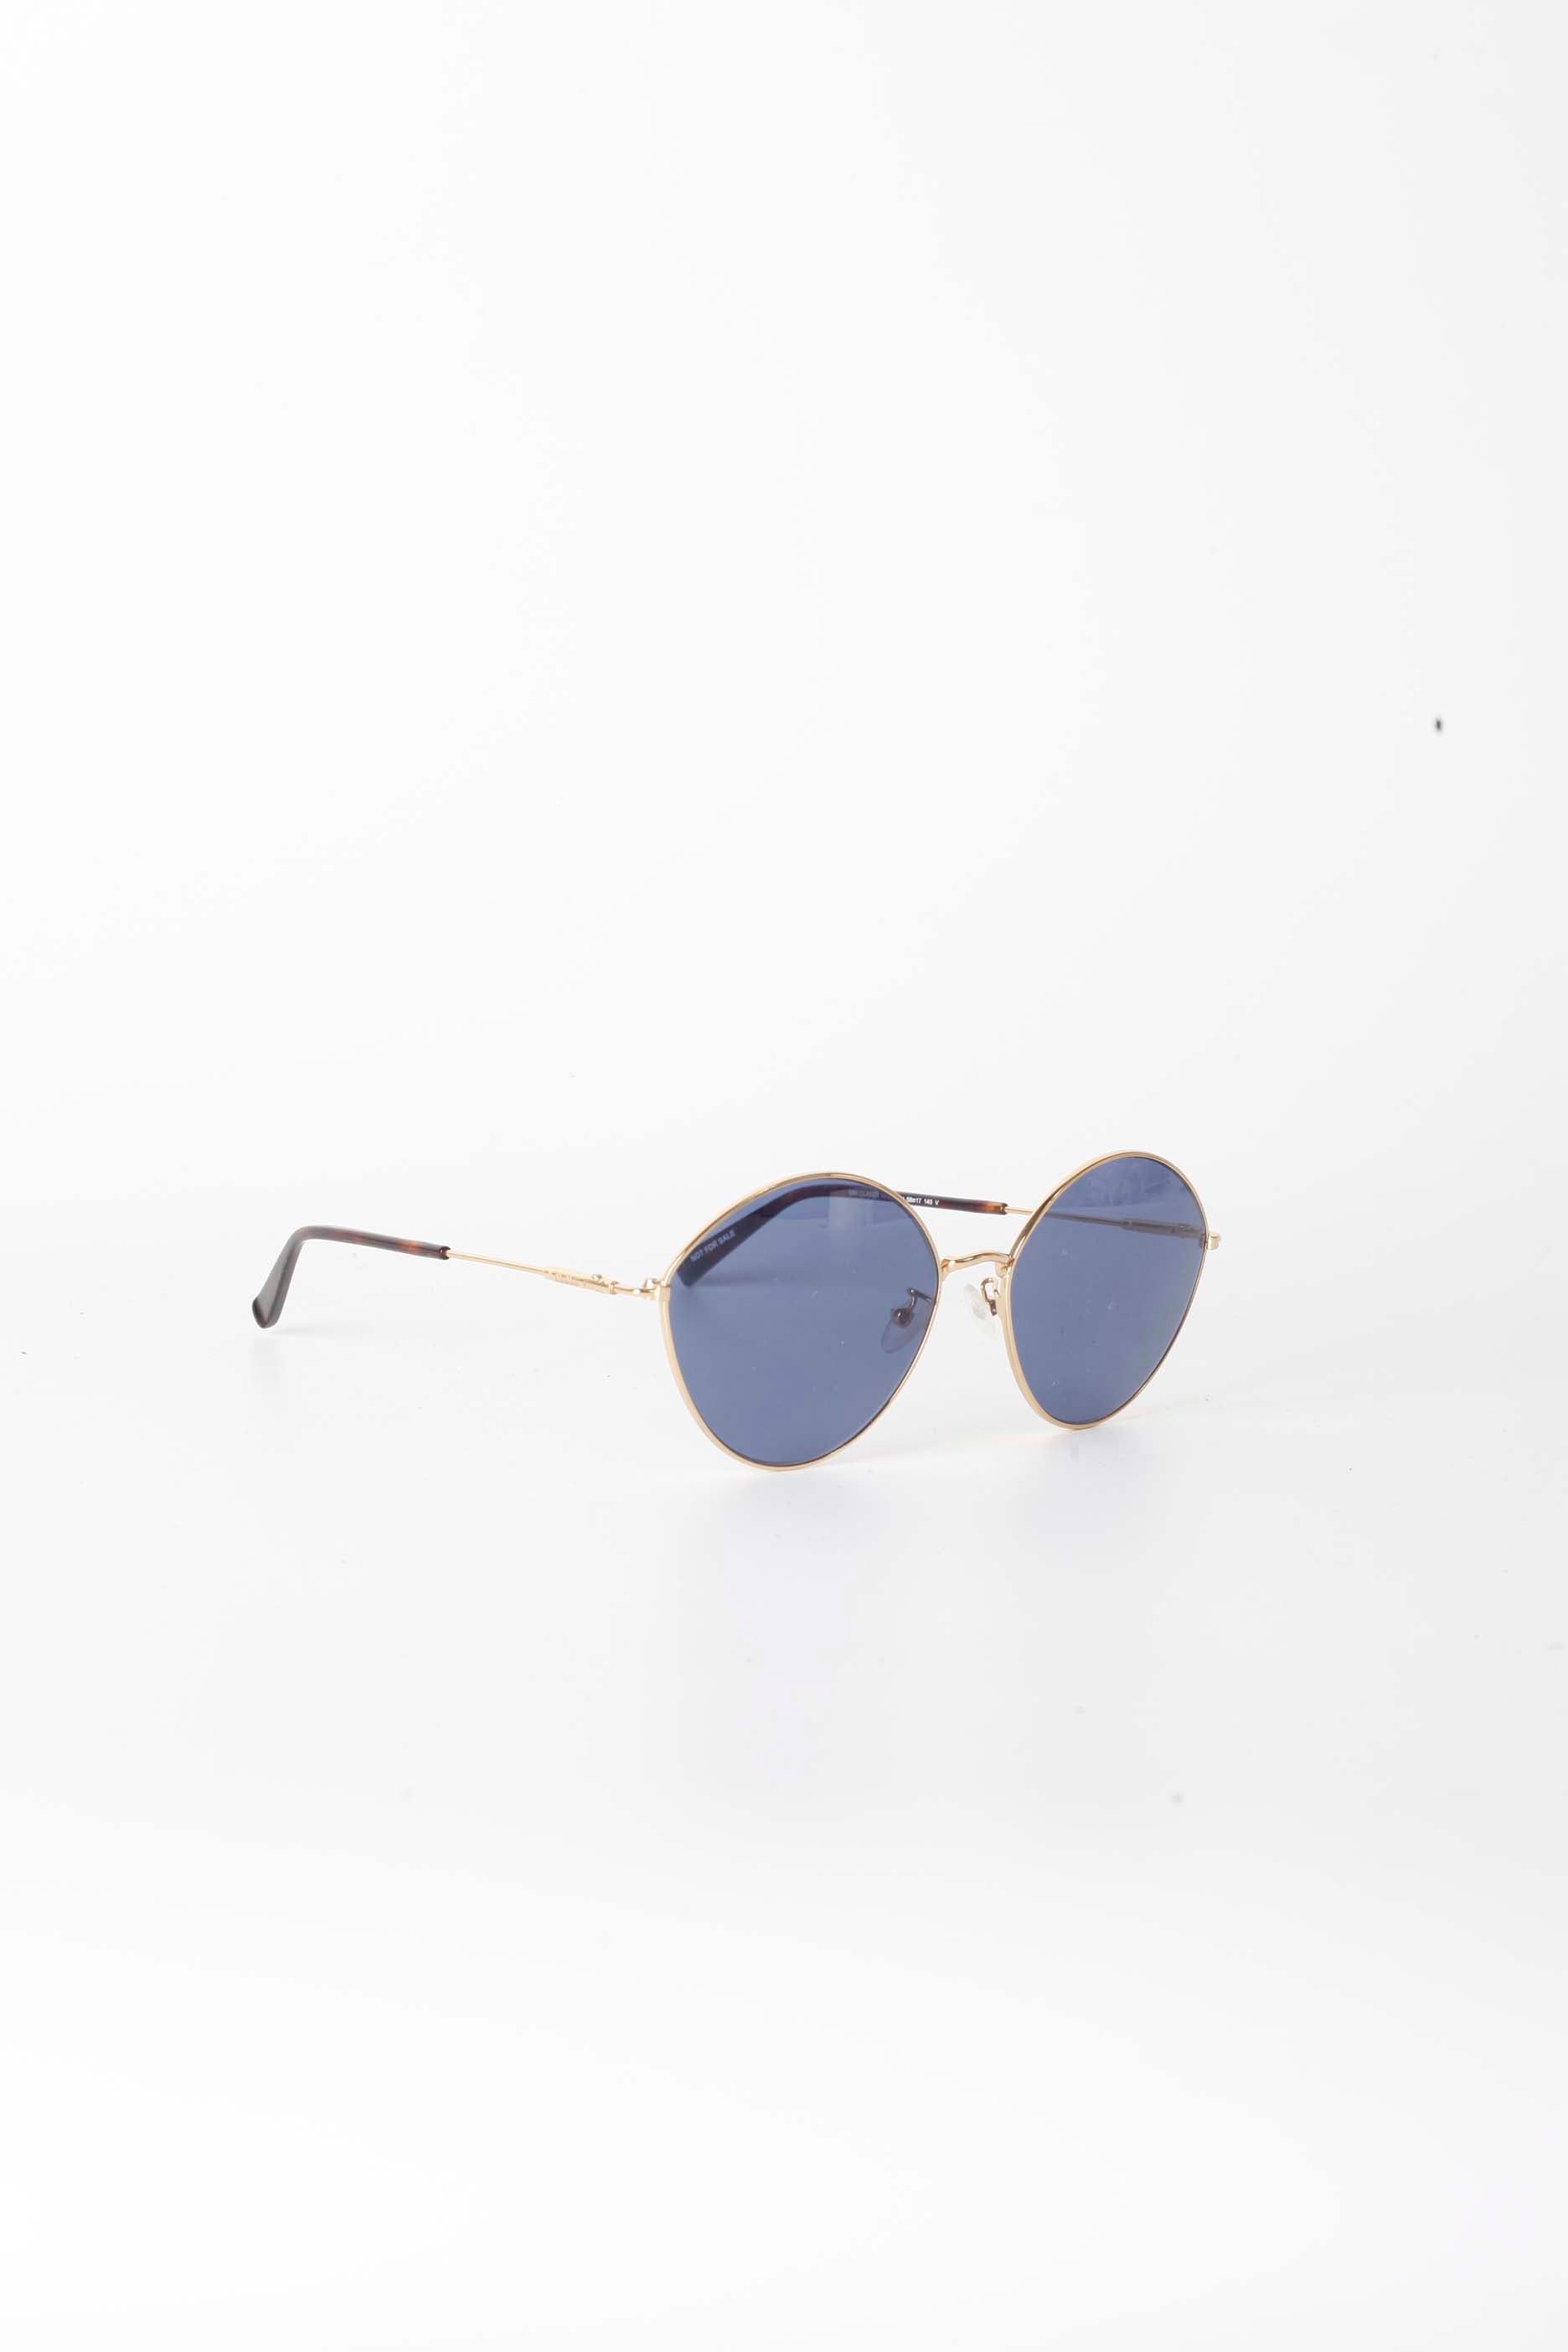 Blue Tint Oval Shaped Sunglasses